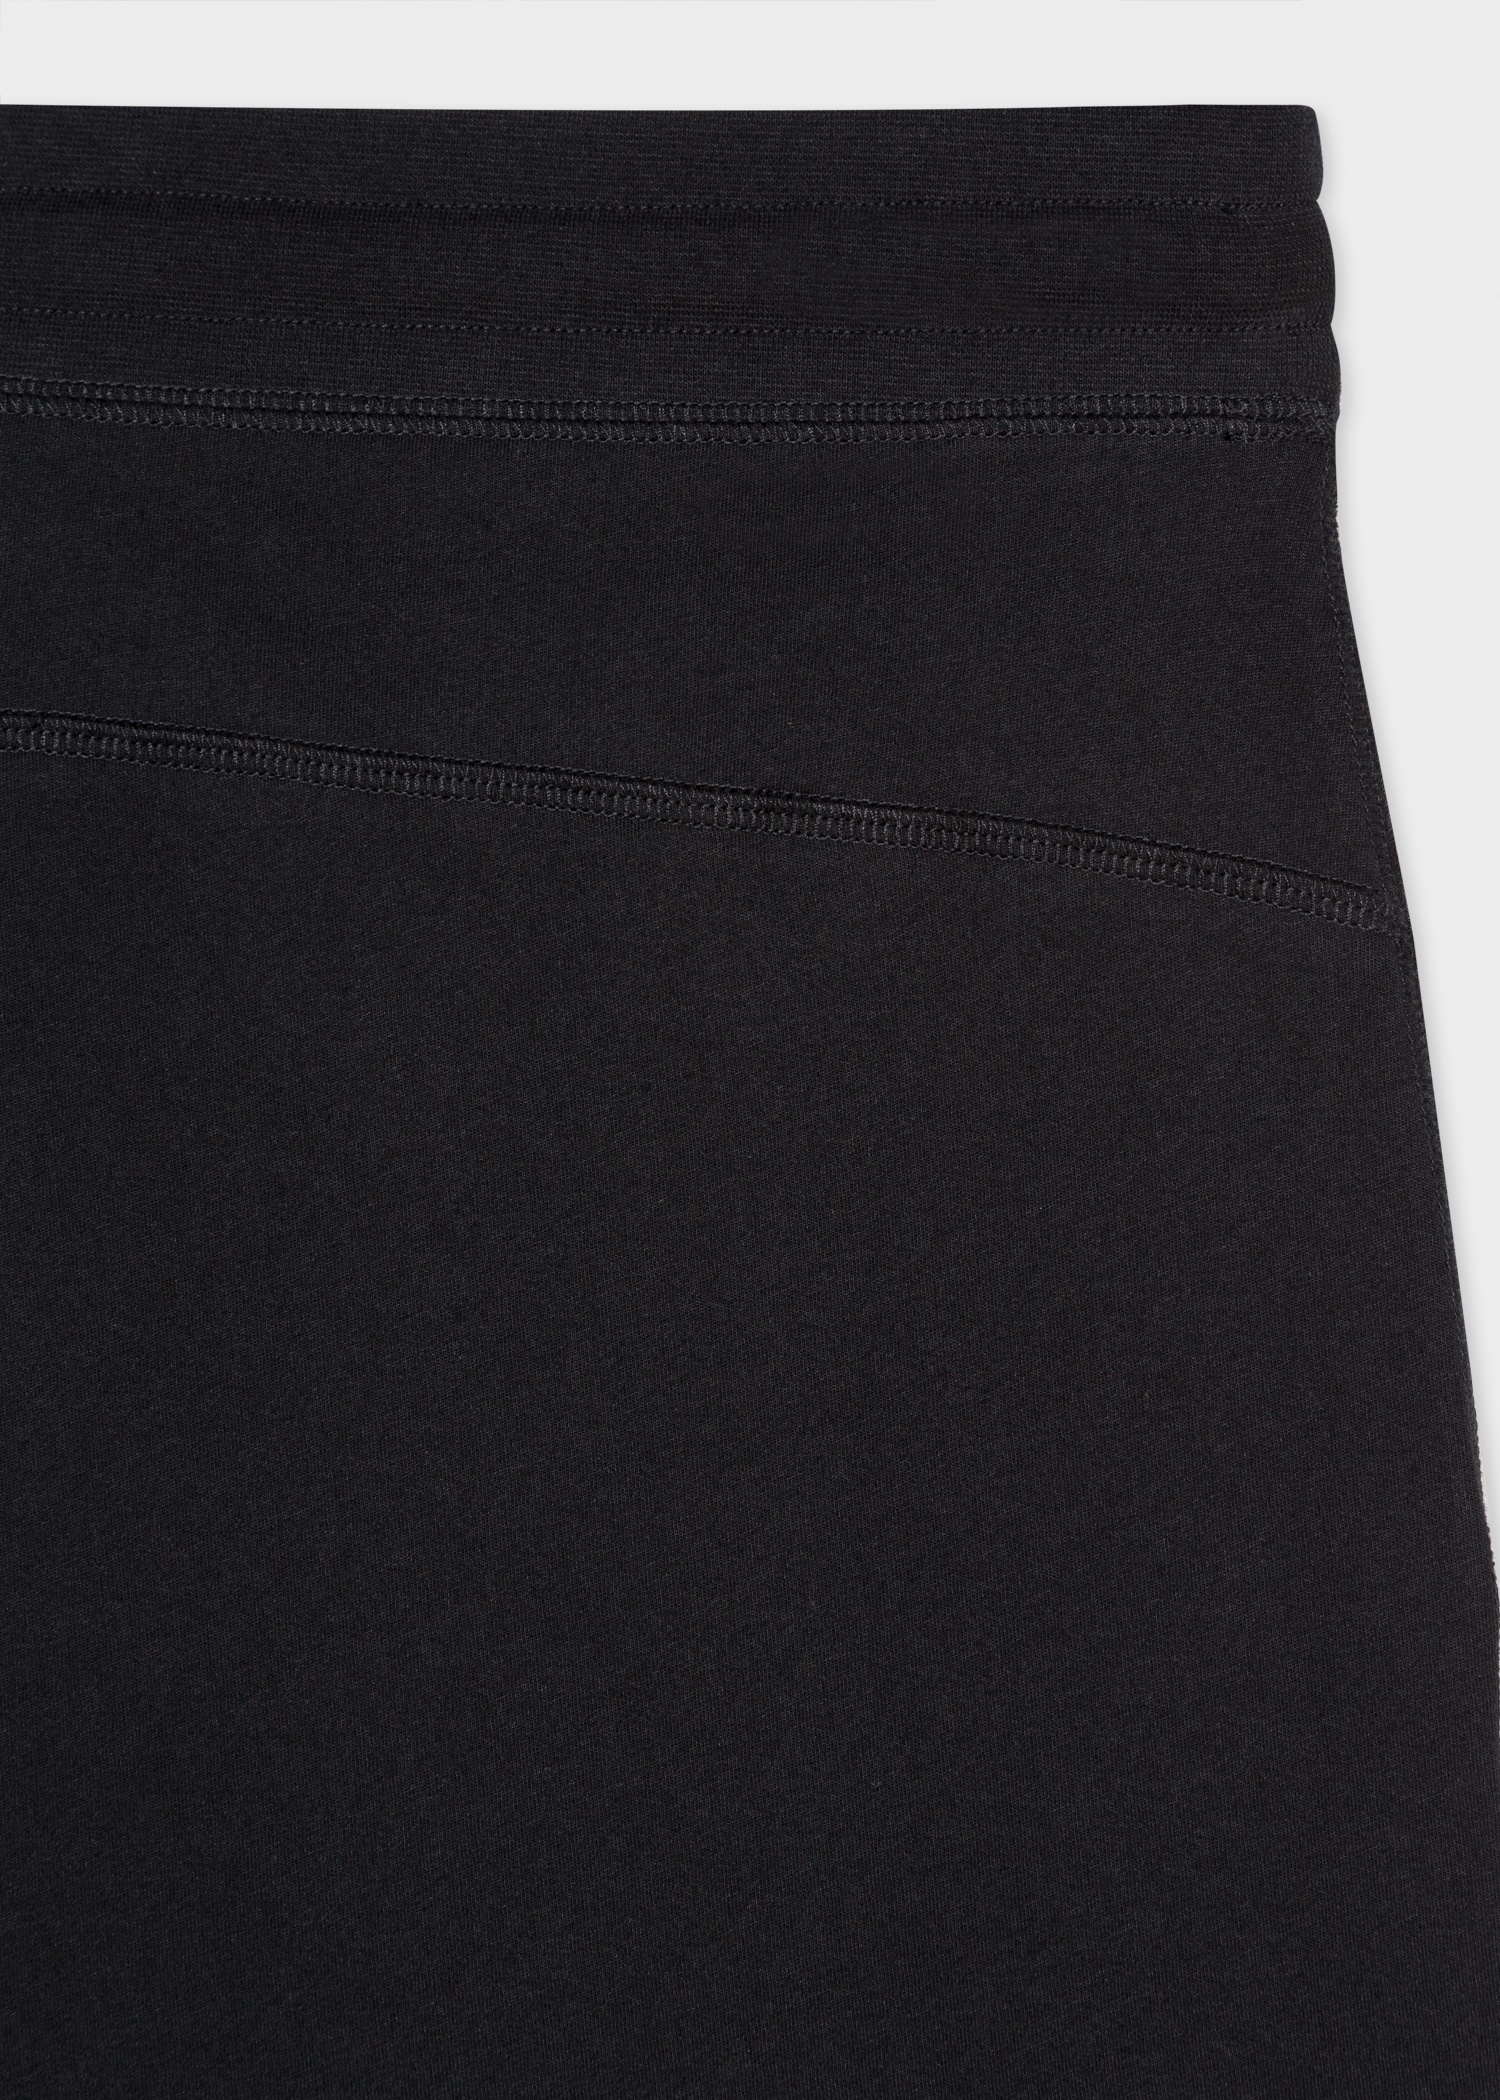 Black Jersey Cotton Lounge Shorts - 3